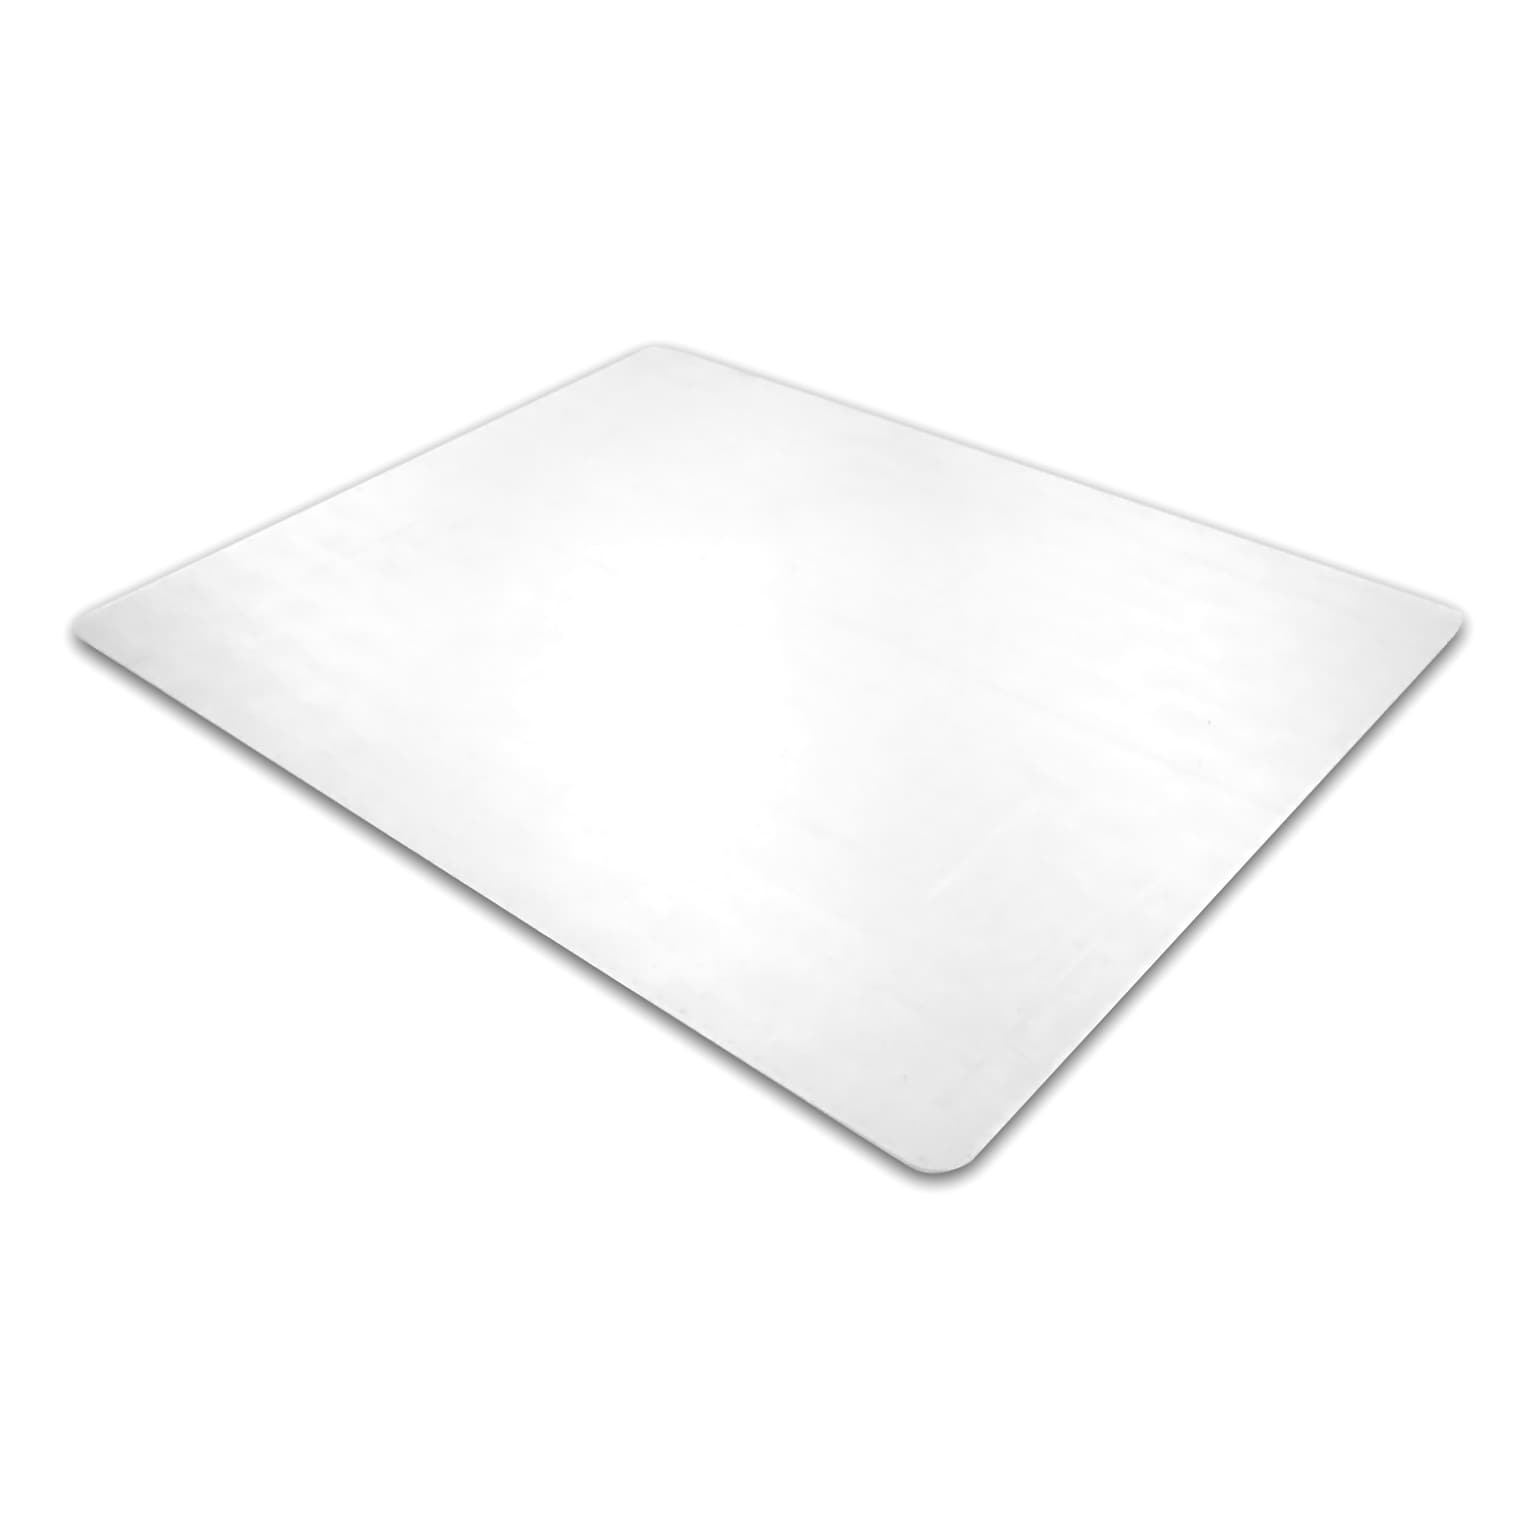 Floortex Valuemat Plus Polycarbonate Hard Floor Chair Mat, Rectangular, 48 x 53, Clear (FR1213015ER)